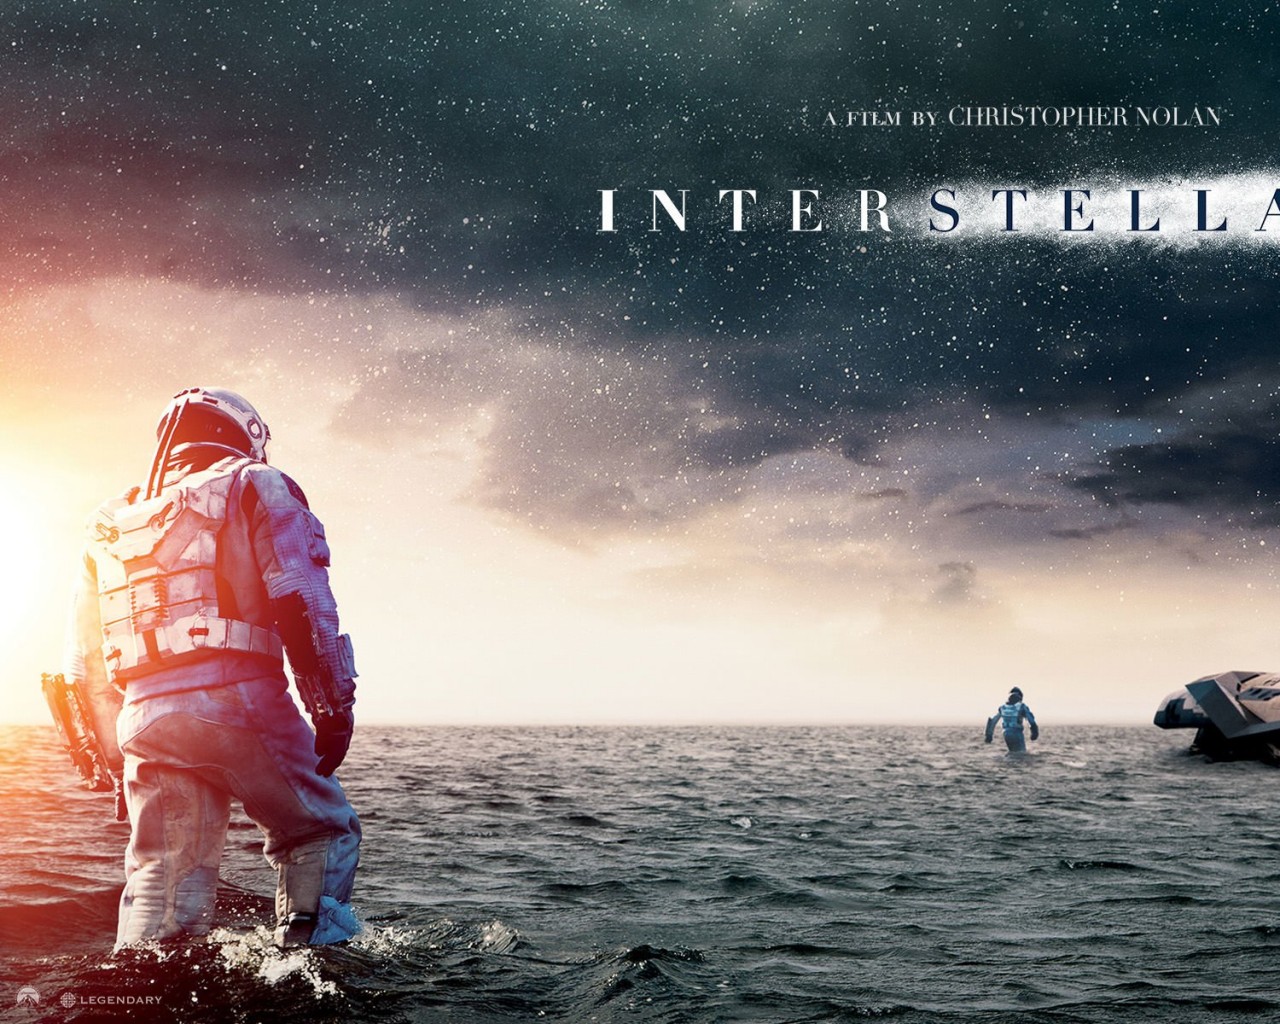 Interstellar The Movie Wallpaper for Desktop 1280x1024